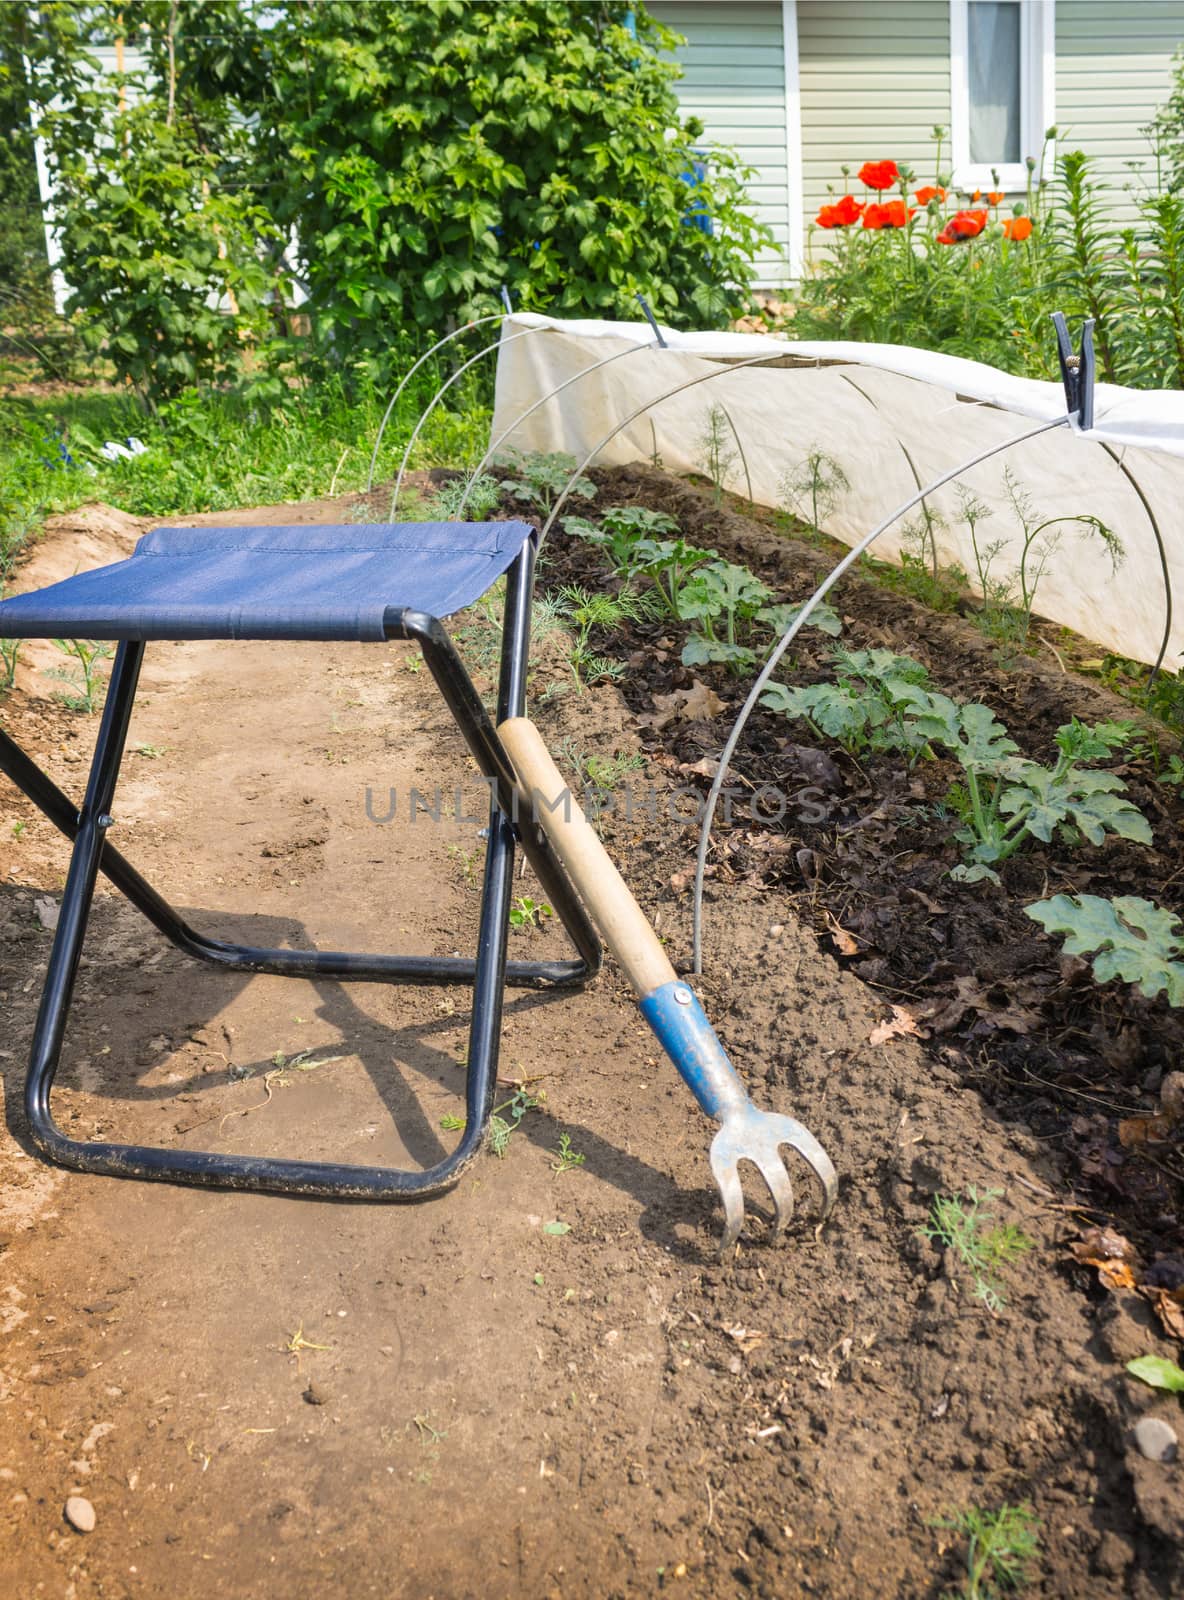 Folding chair and rake near the vegetable garden